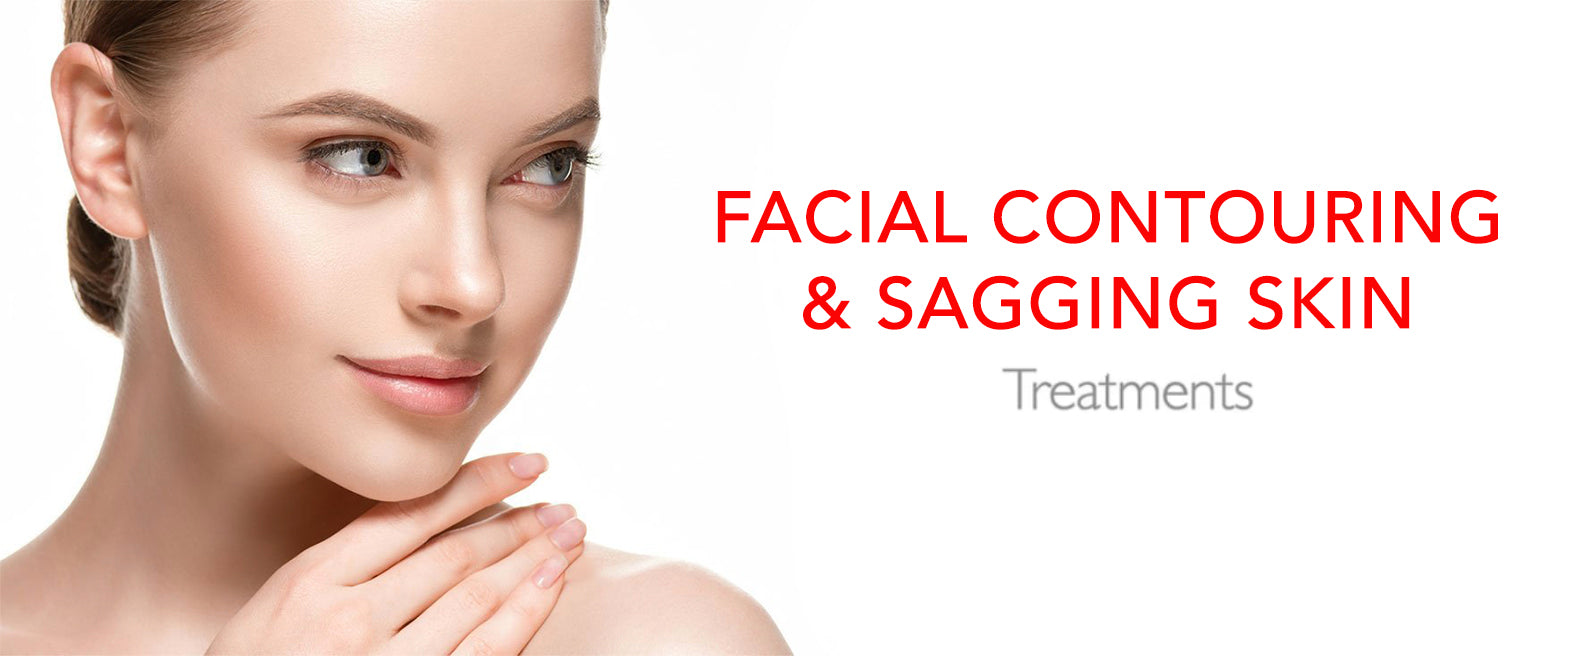 Facial Contouring and Sagging Skin Treatments